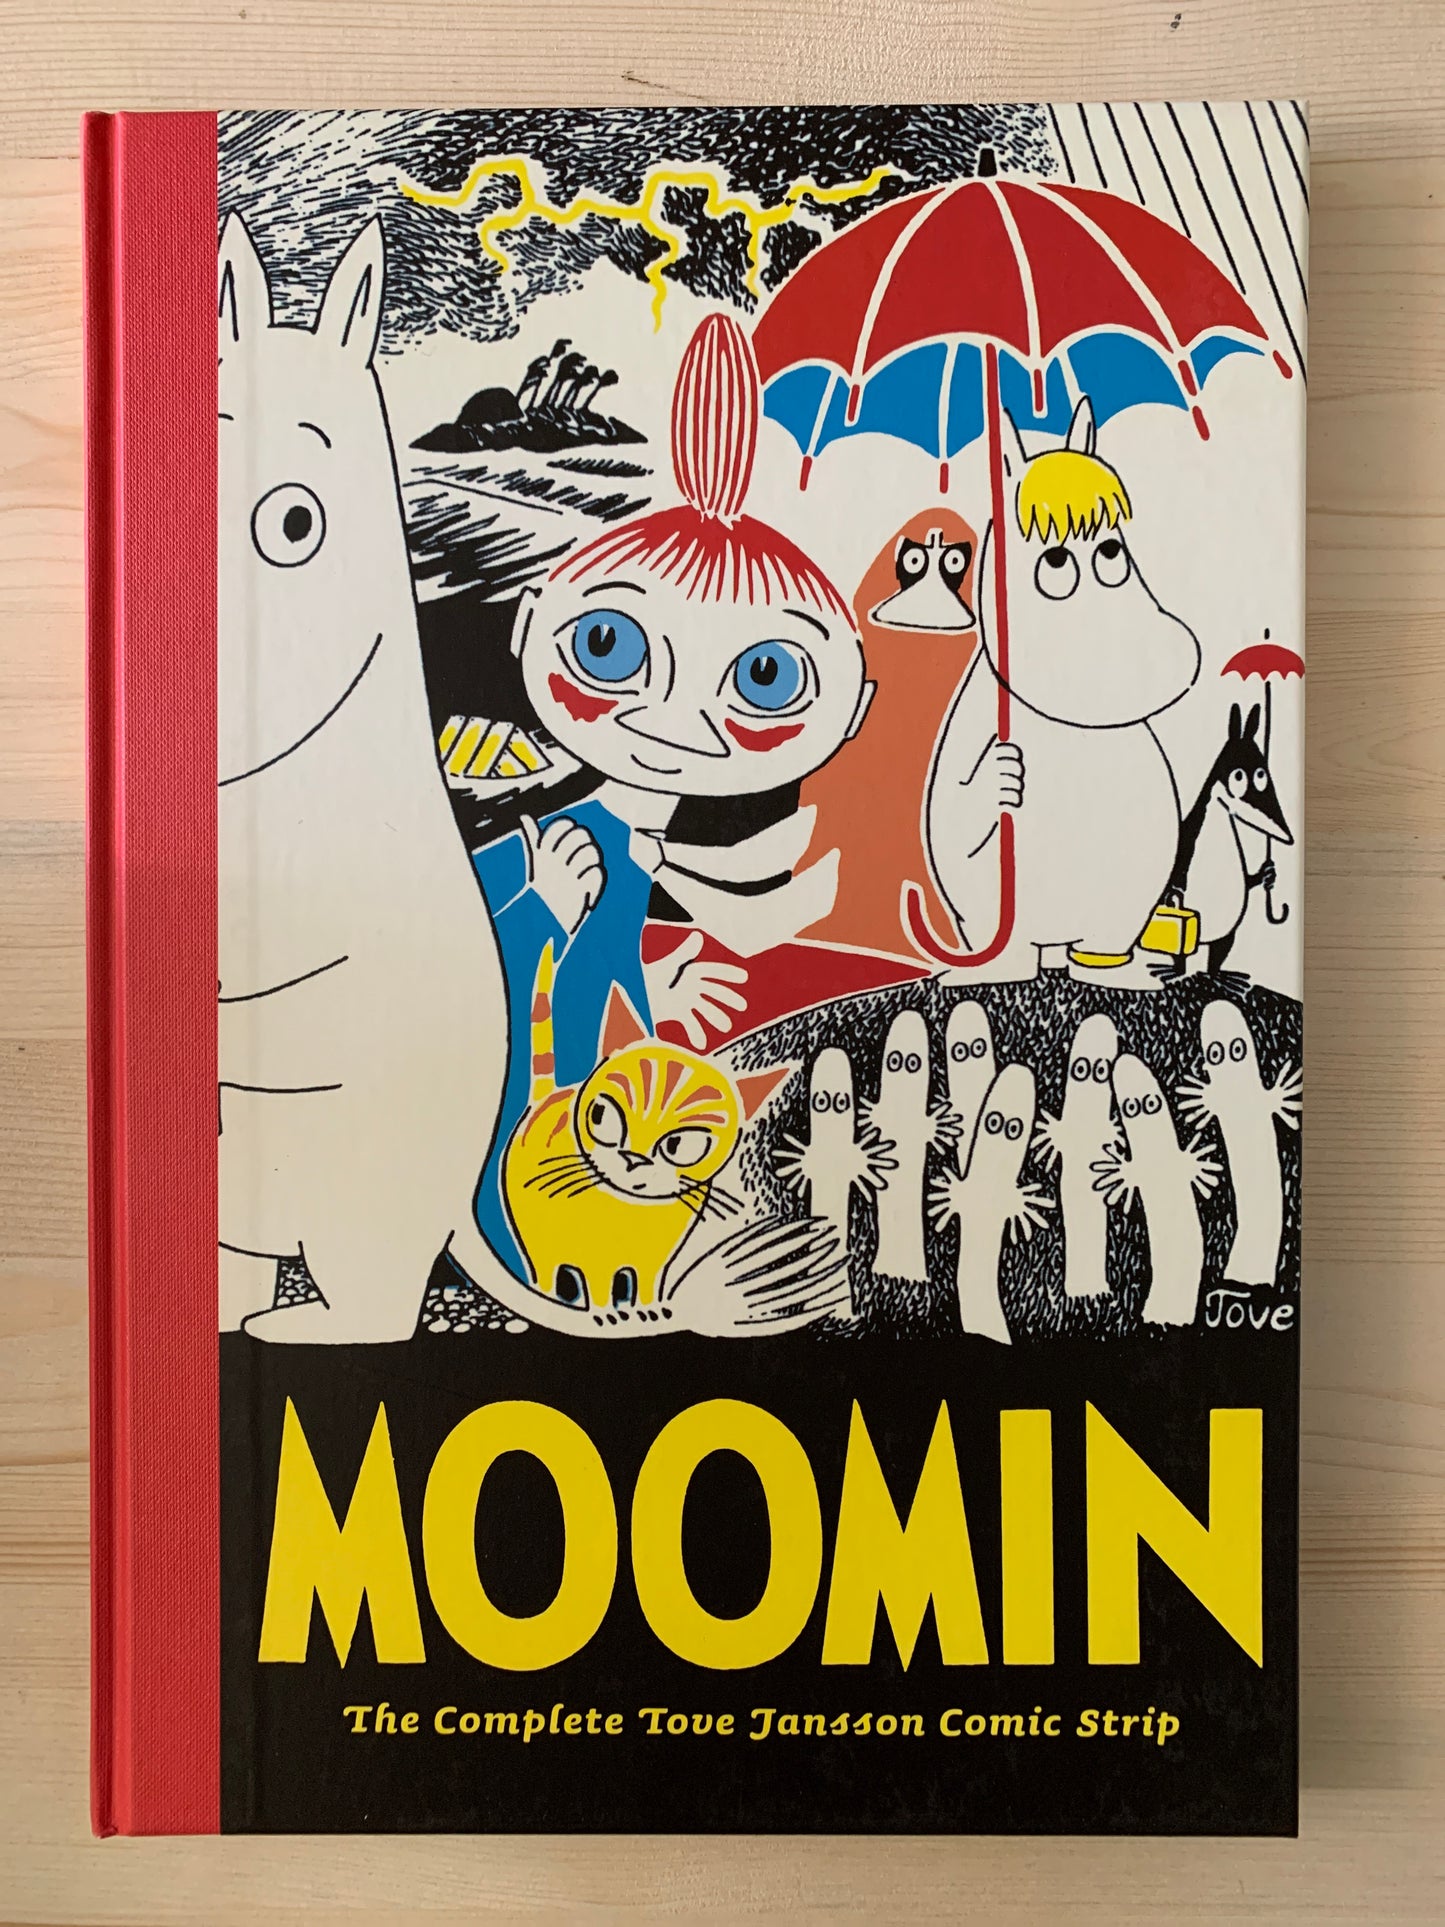 Moomin: The Complete Tove Jansson Comic Strip Volume 1